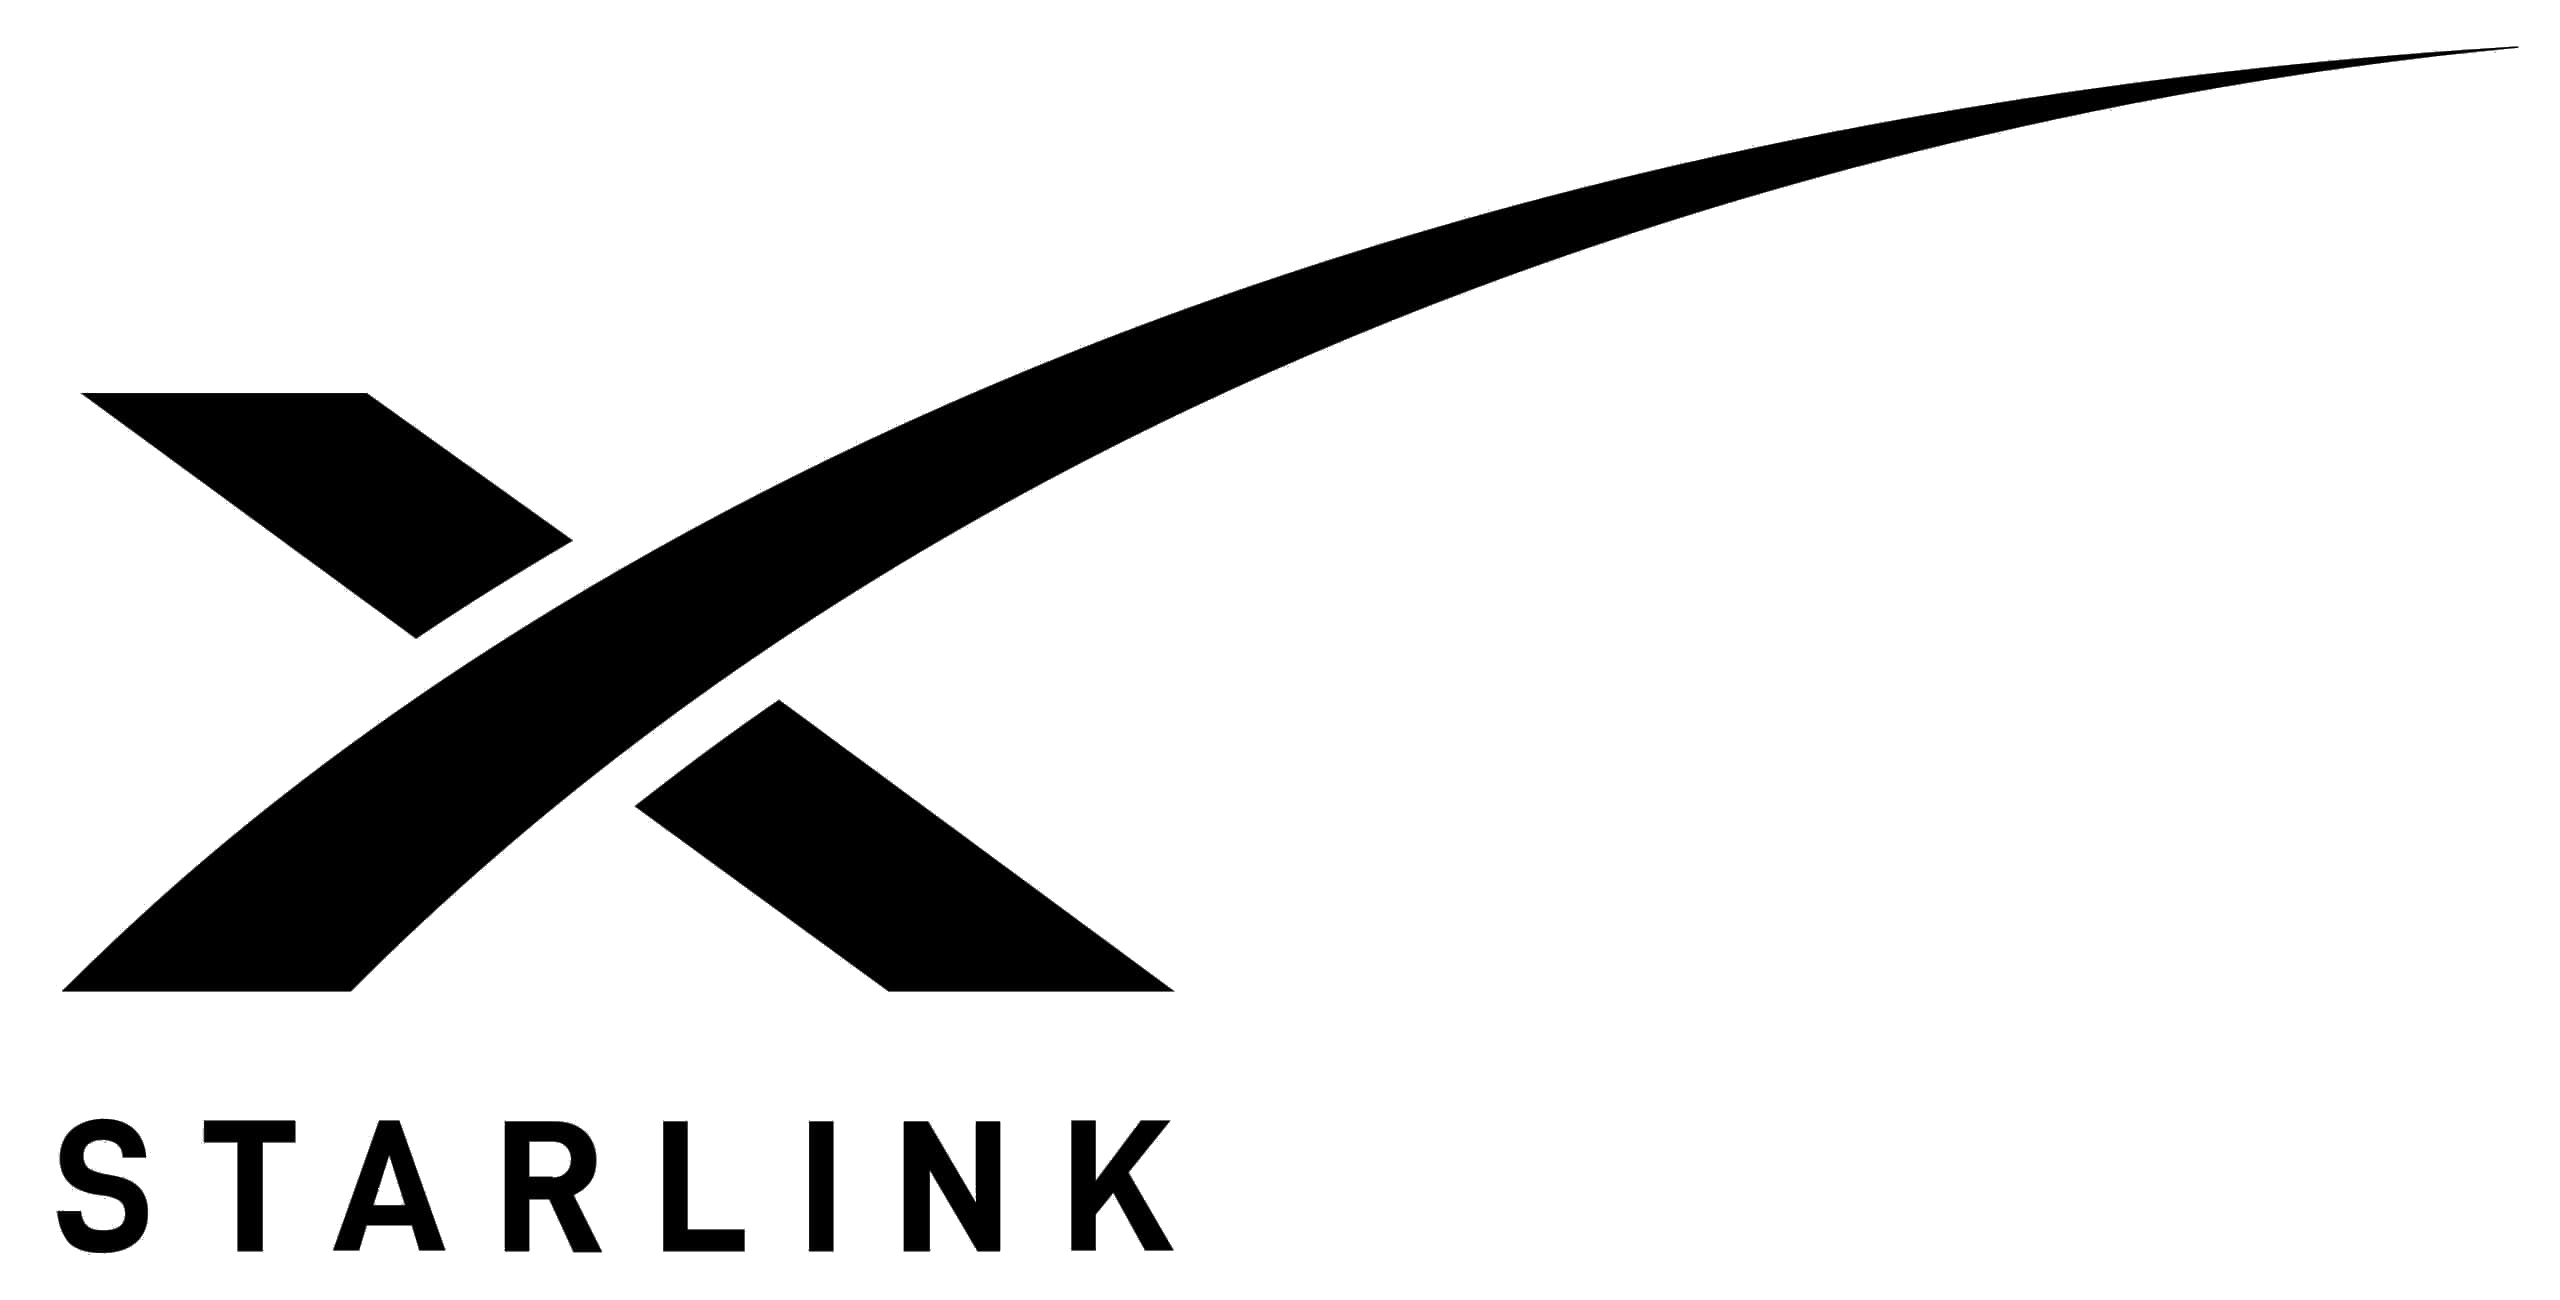 Black Starlink logo on white background